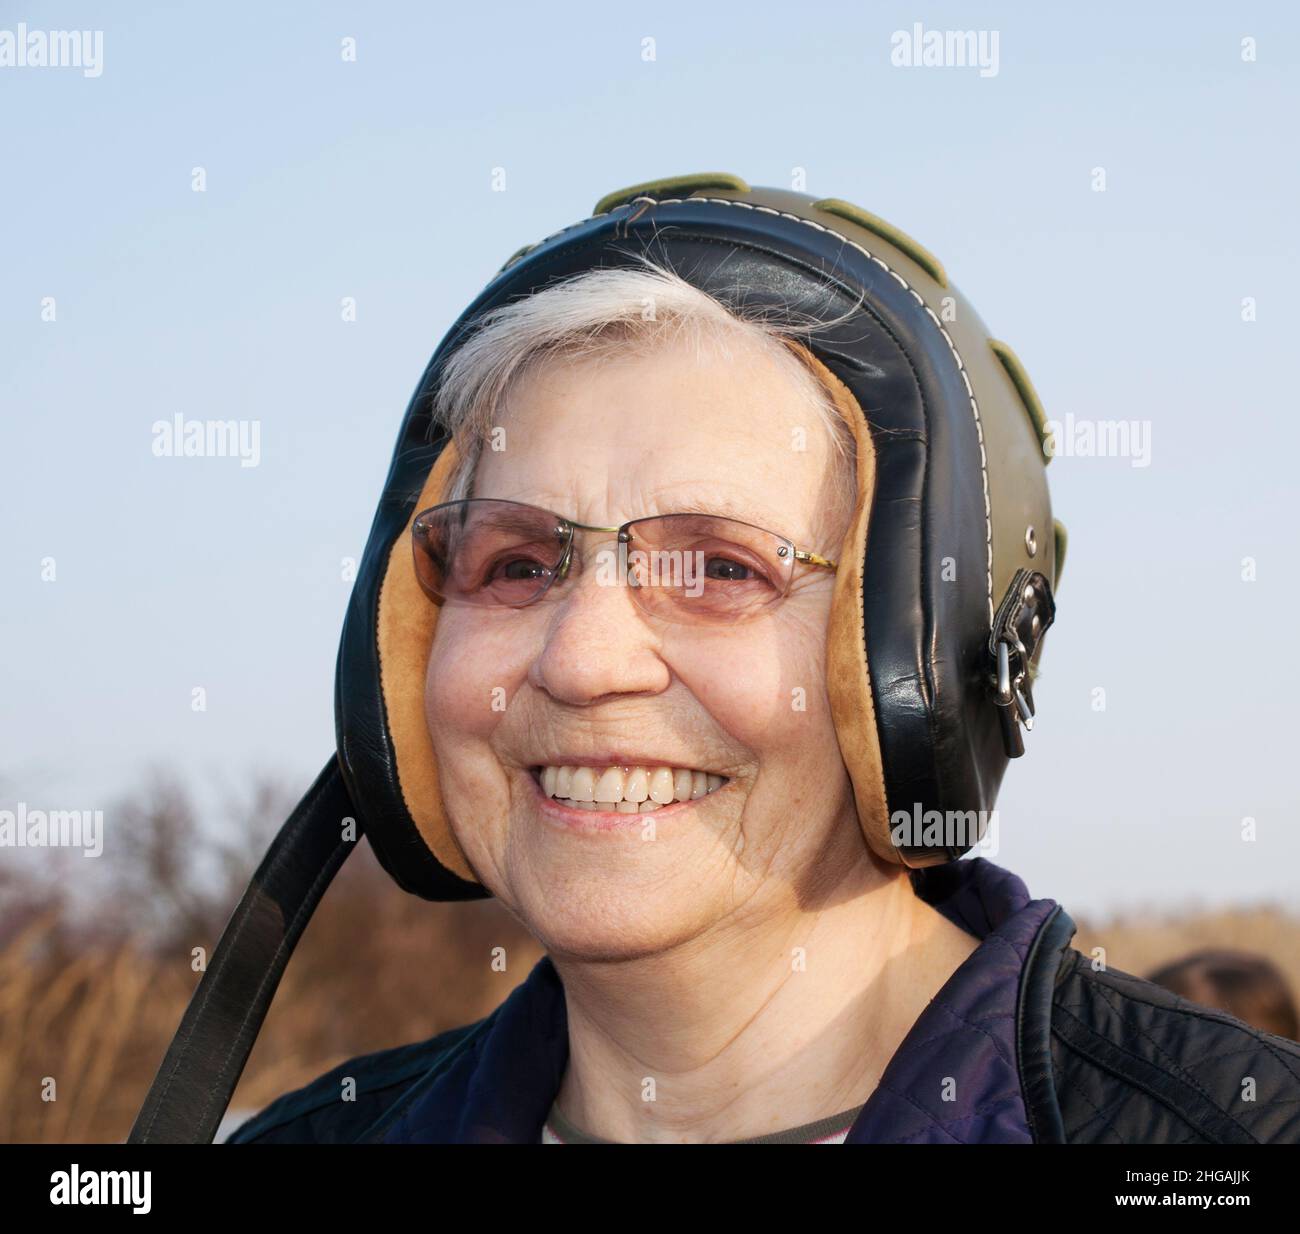 Smilling elderly lady in helmet Stock Photo